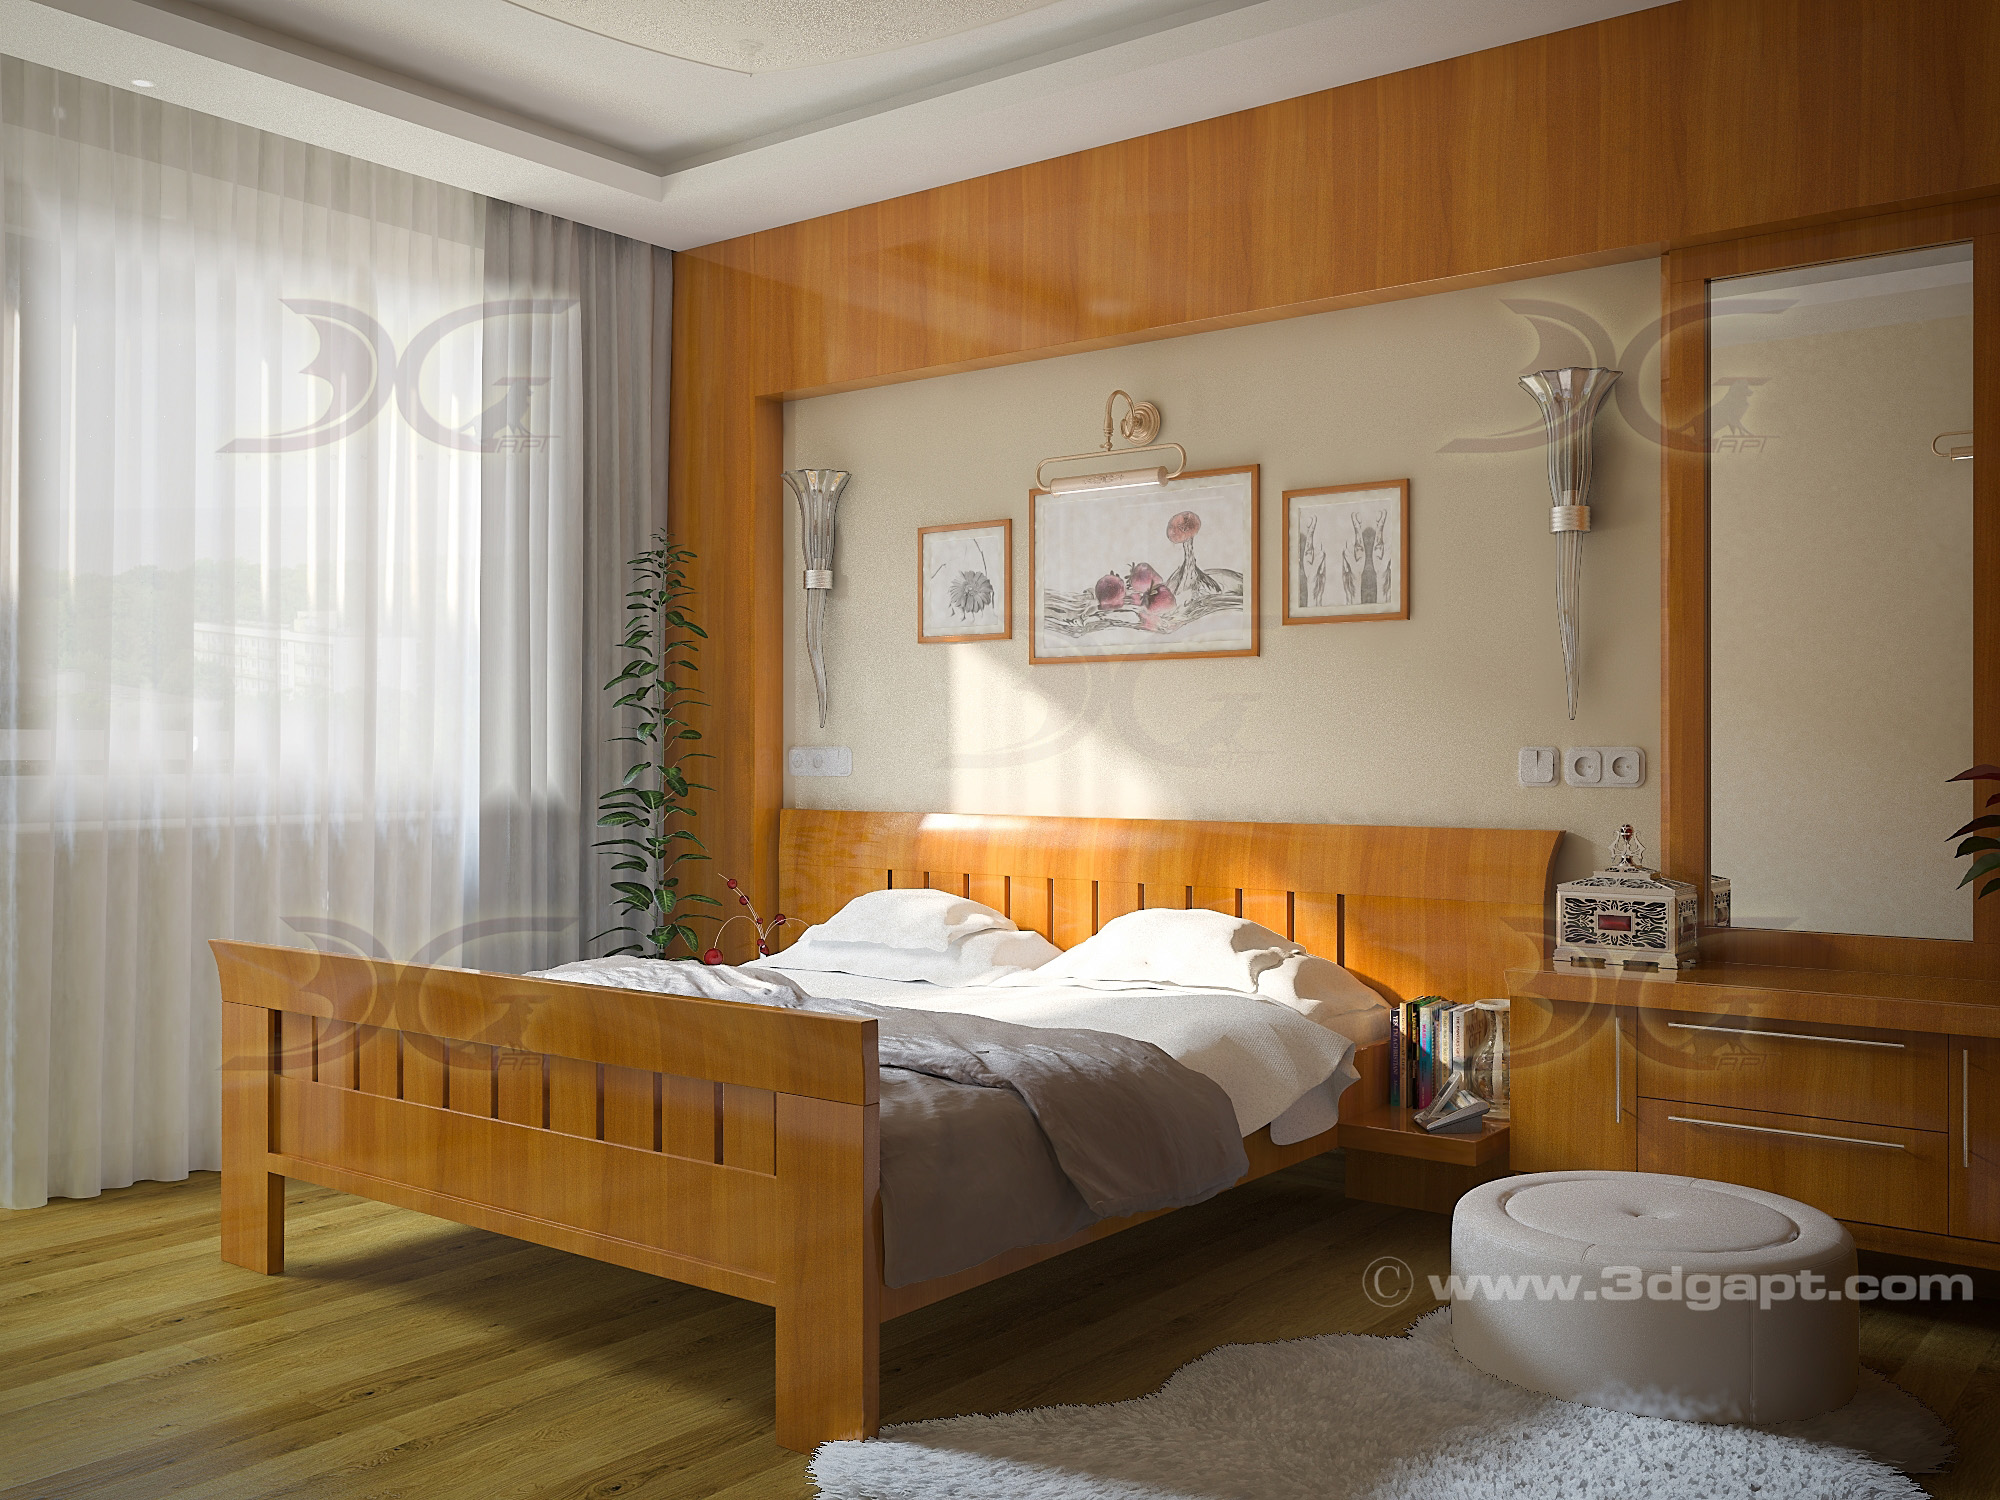 architecture interior bedroom-2 001